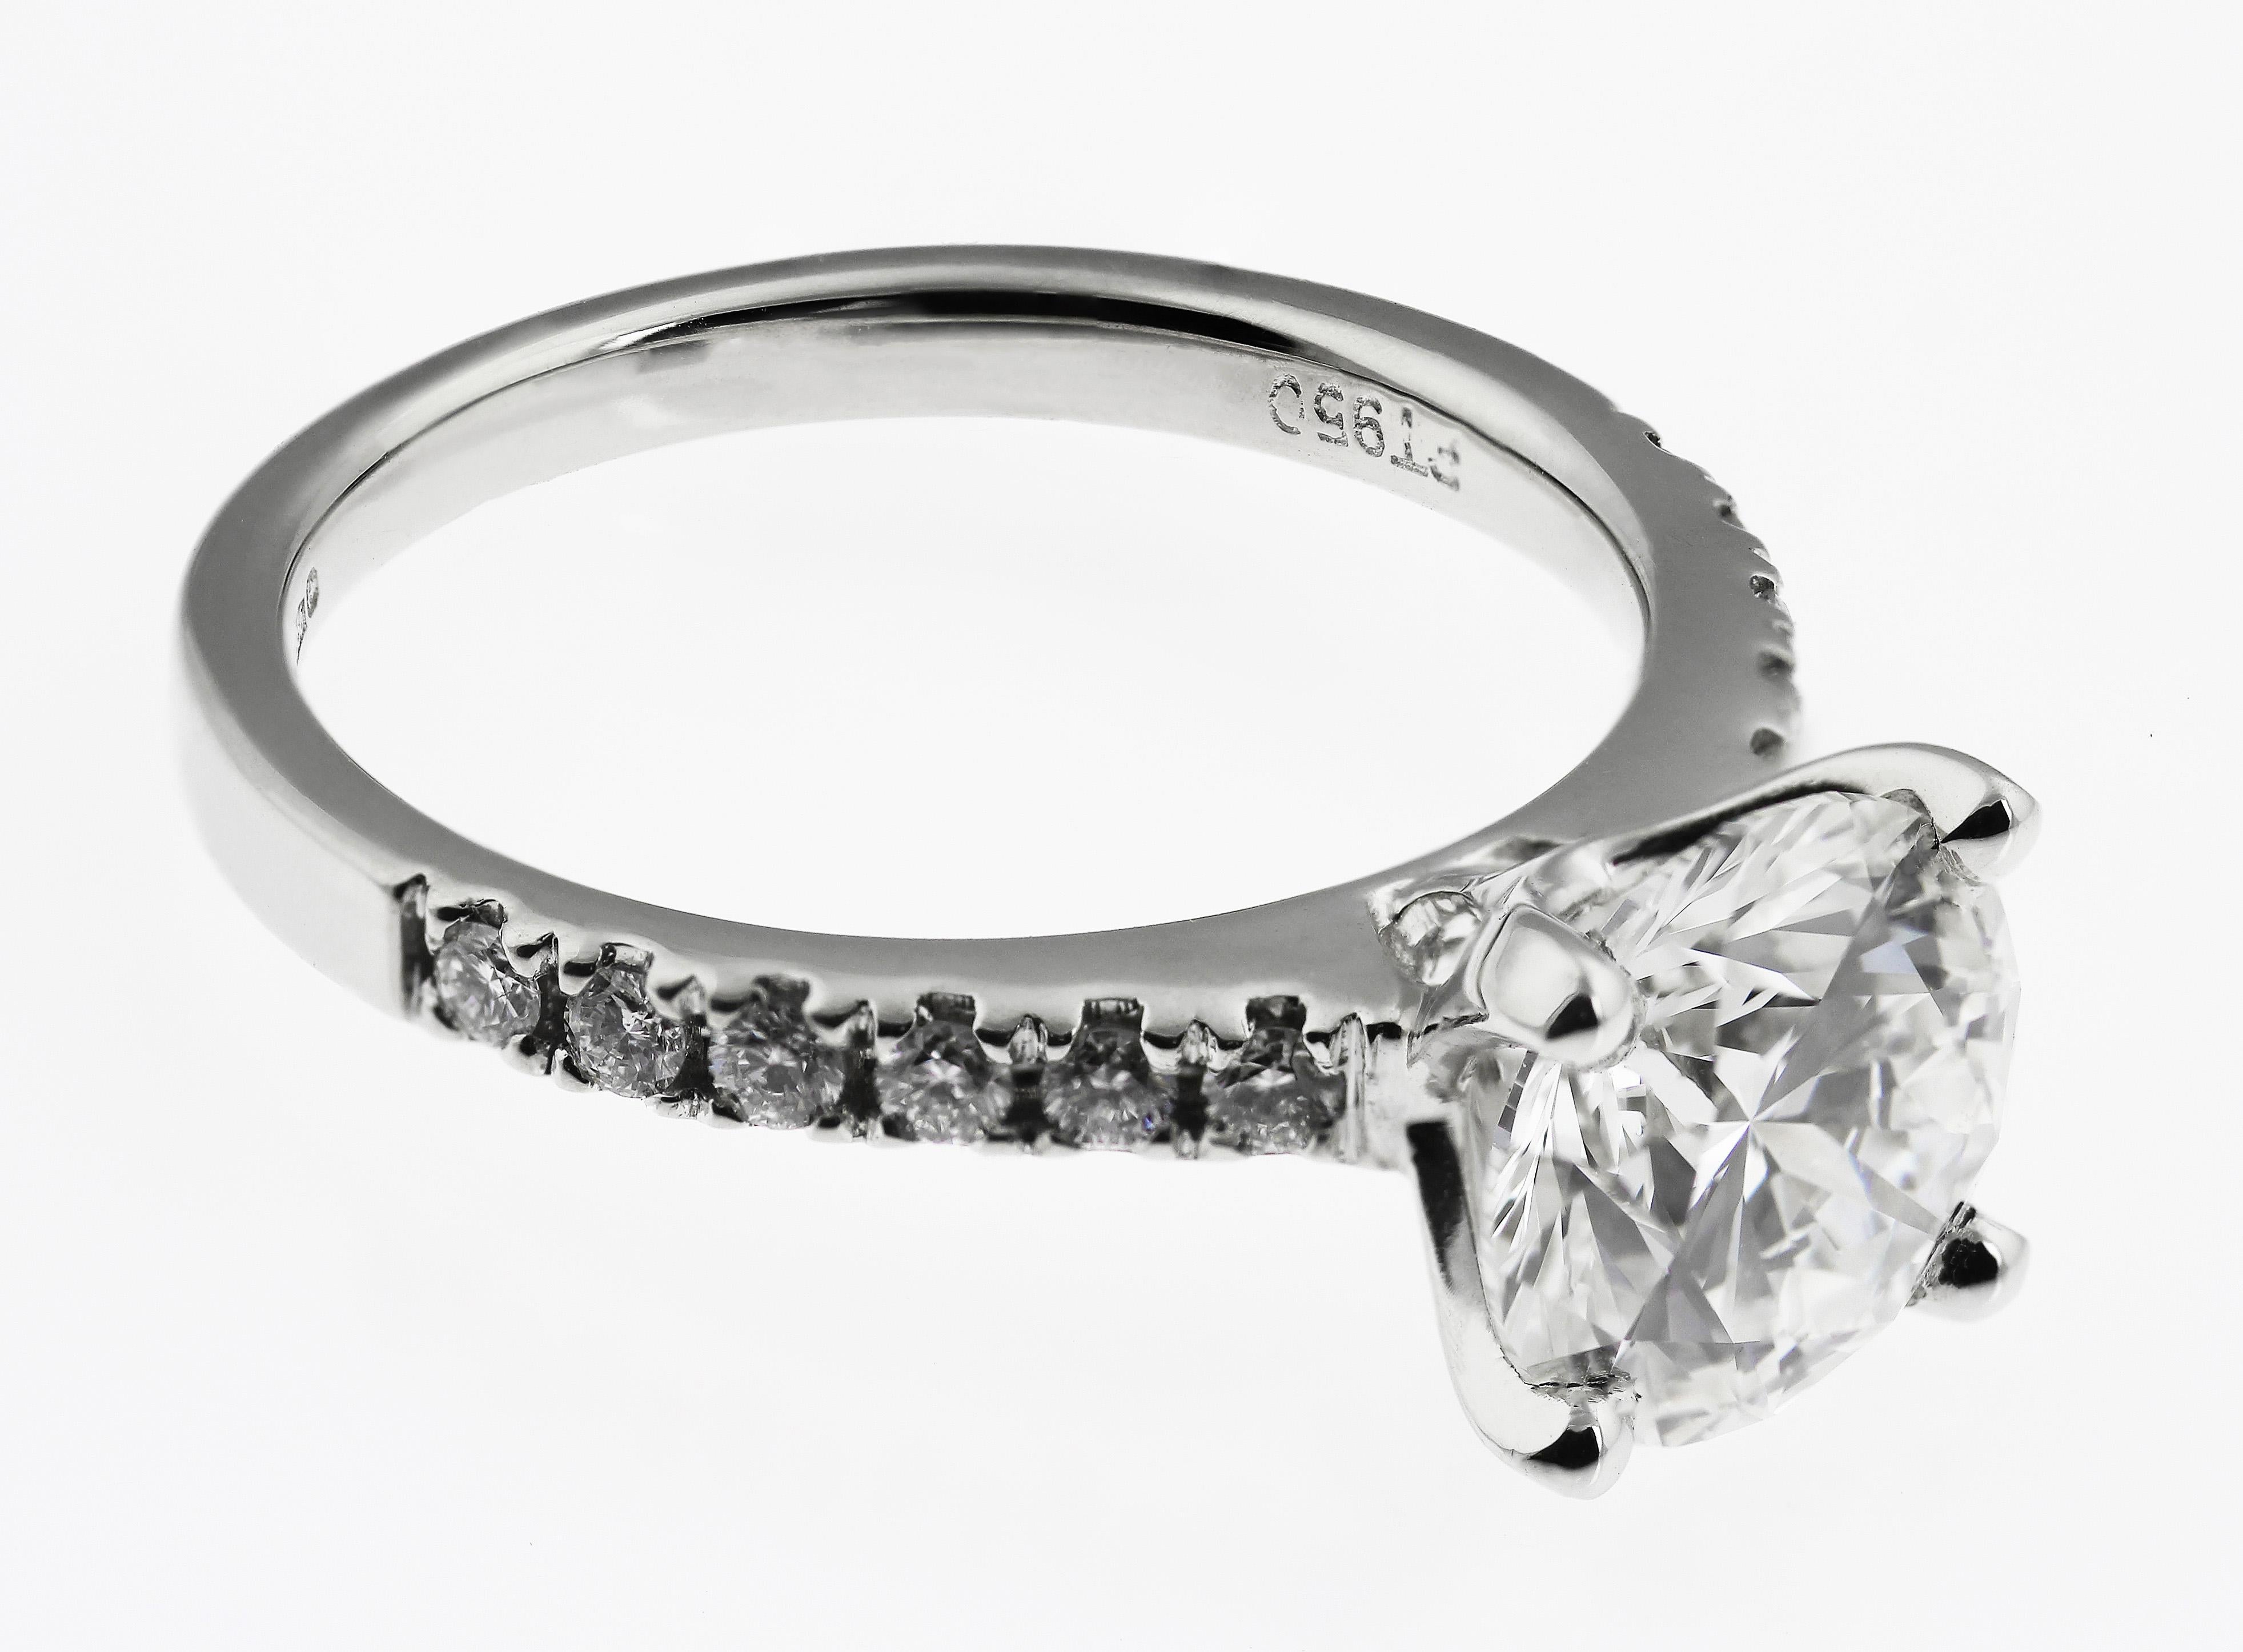 2.2 carat round diamond engagement ring